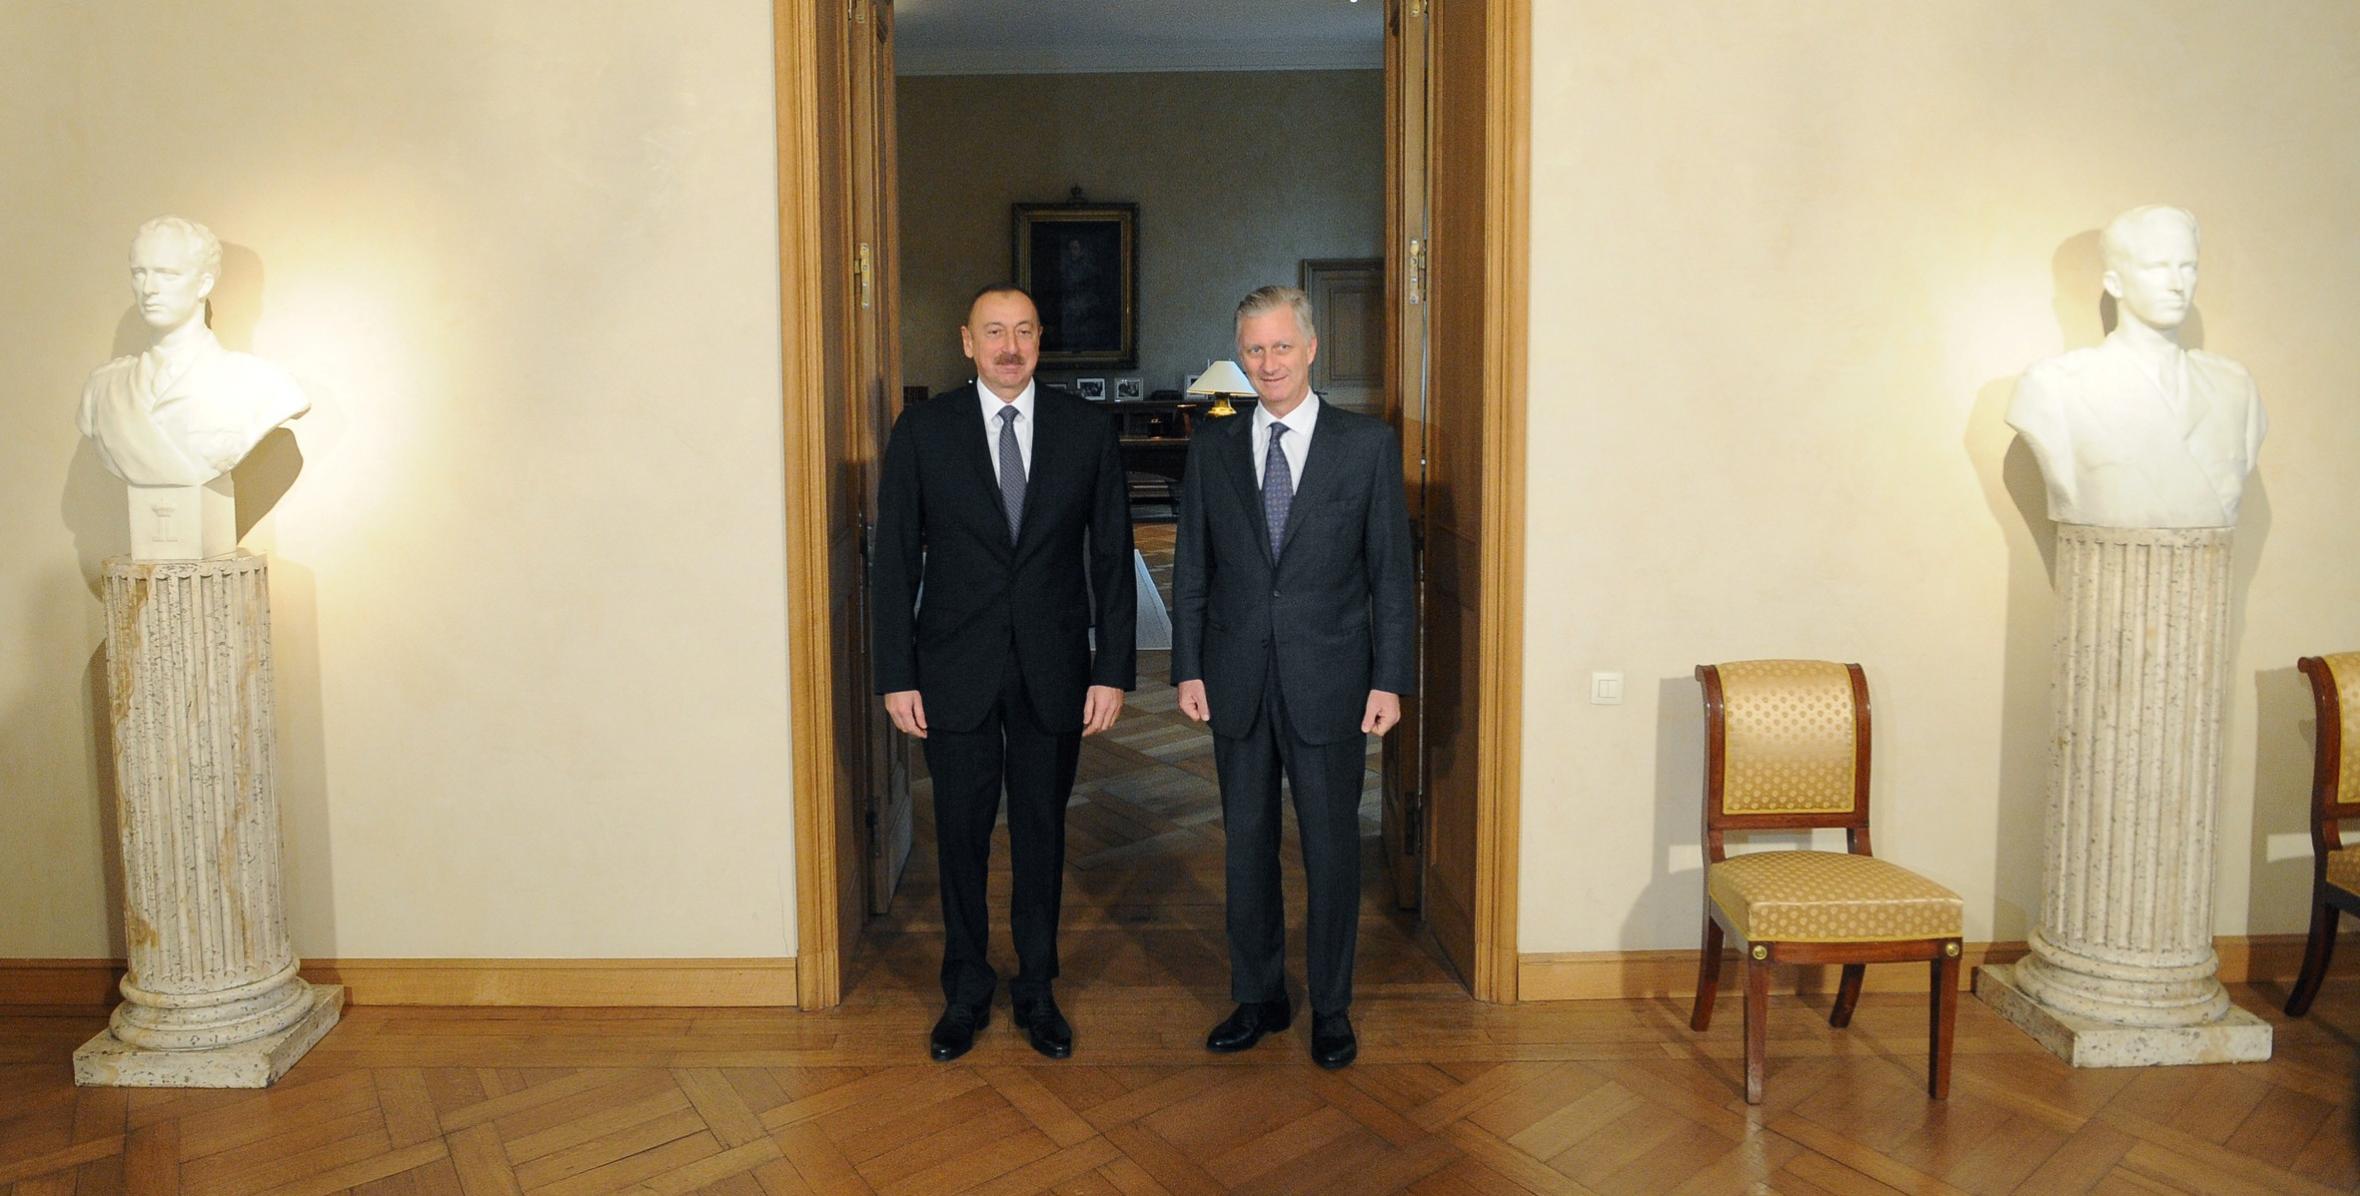 Ilham Aliyev met with King Philippe of Belgium